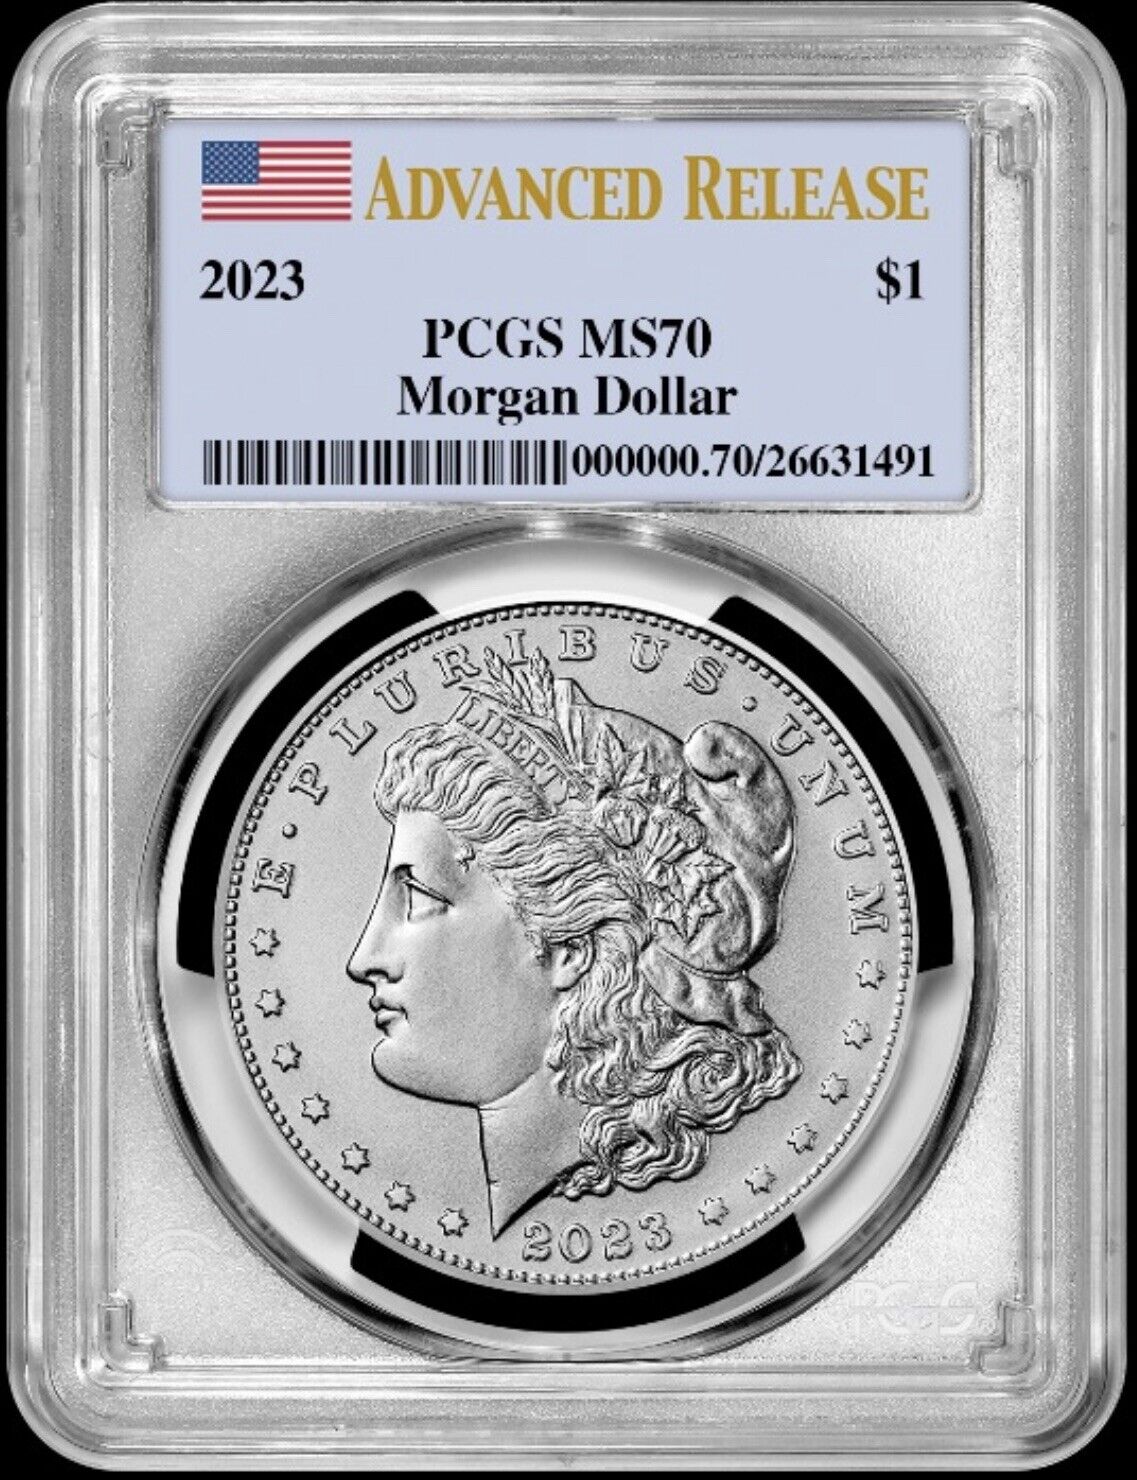 2023 Morgan Silver Dollar (MS70) PCGS Advanced Release (AR) - presale